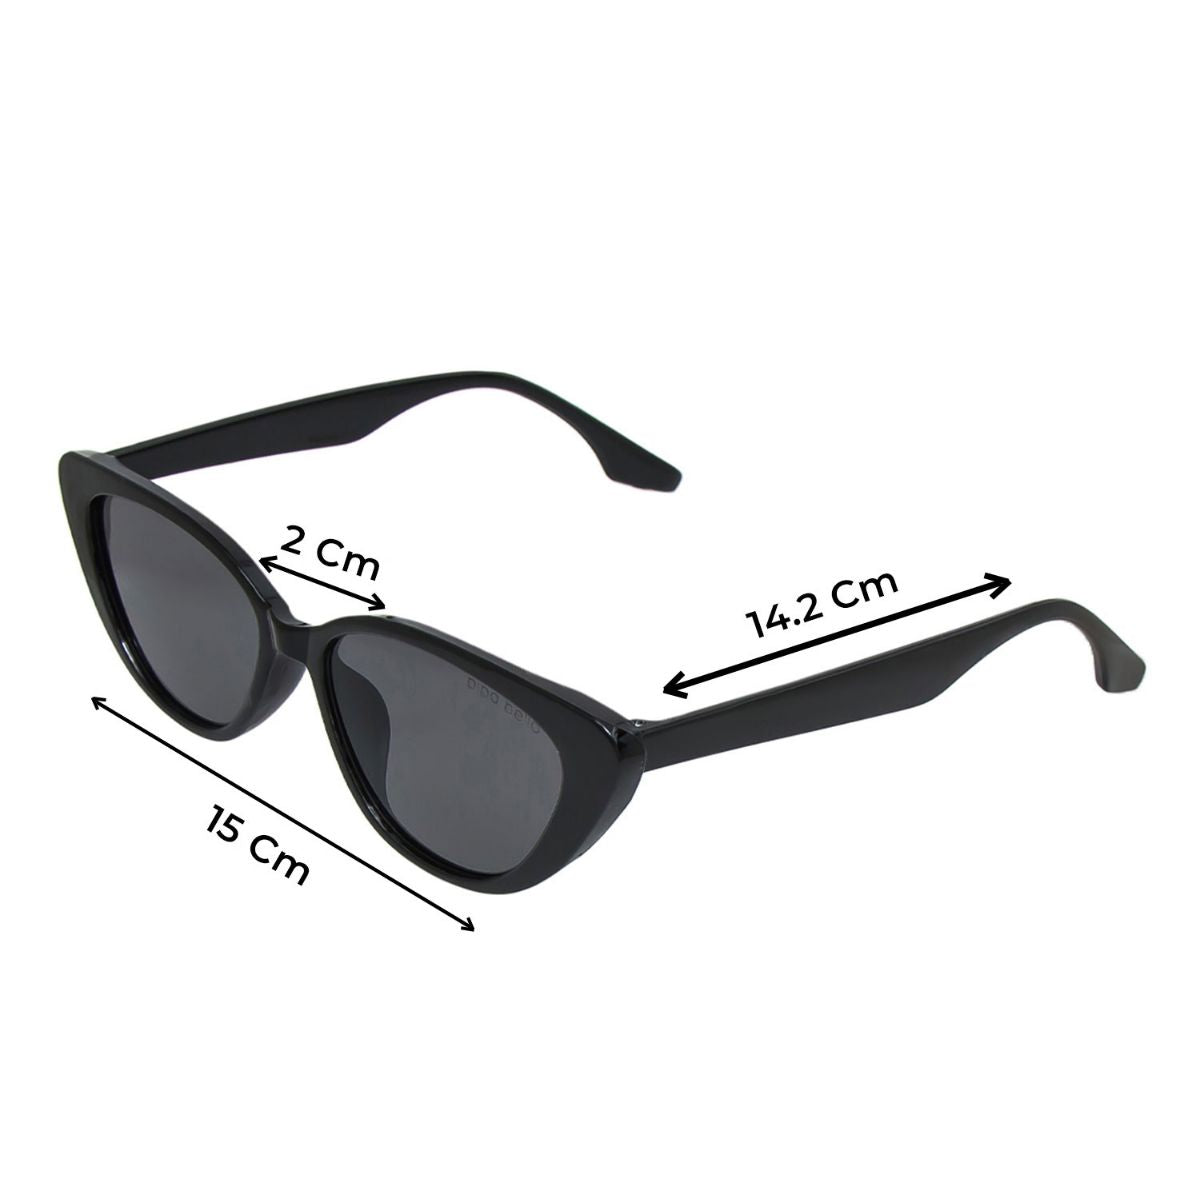 Always In Style Black Wayfarer Sunglasses with Brown Lens